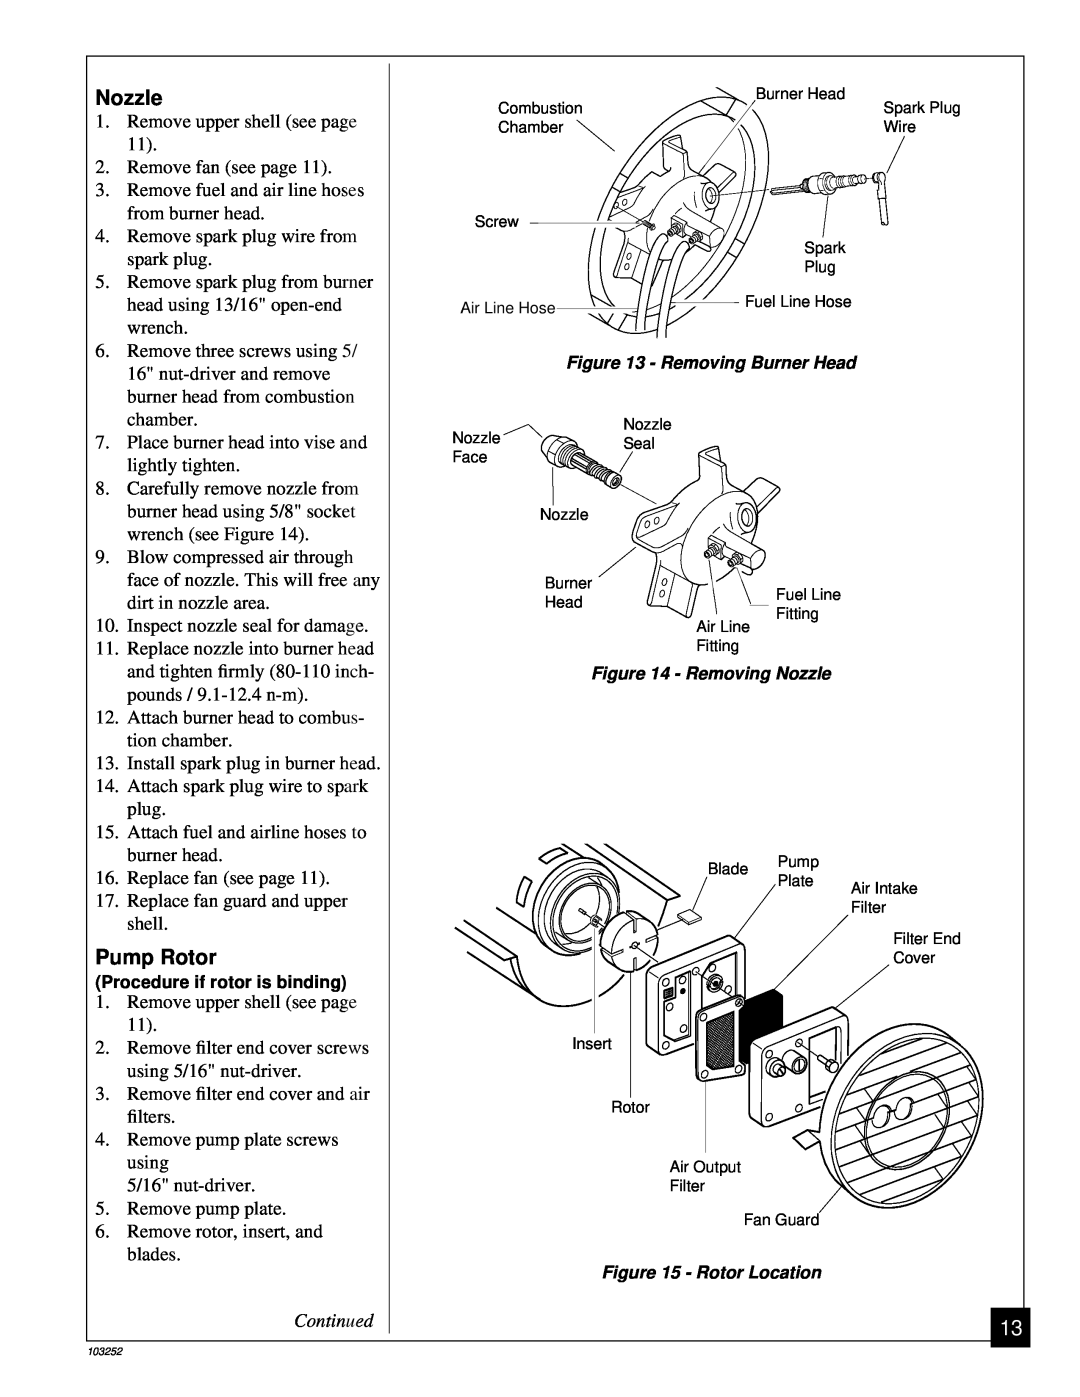 Desa RK150 owner manual Nozzle, Pump Rotor, Continued 